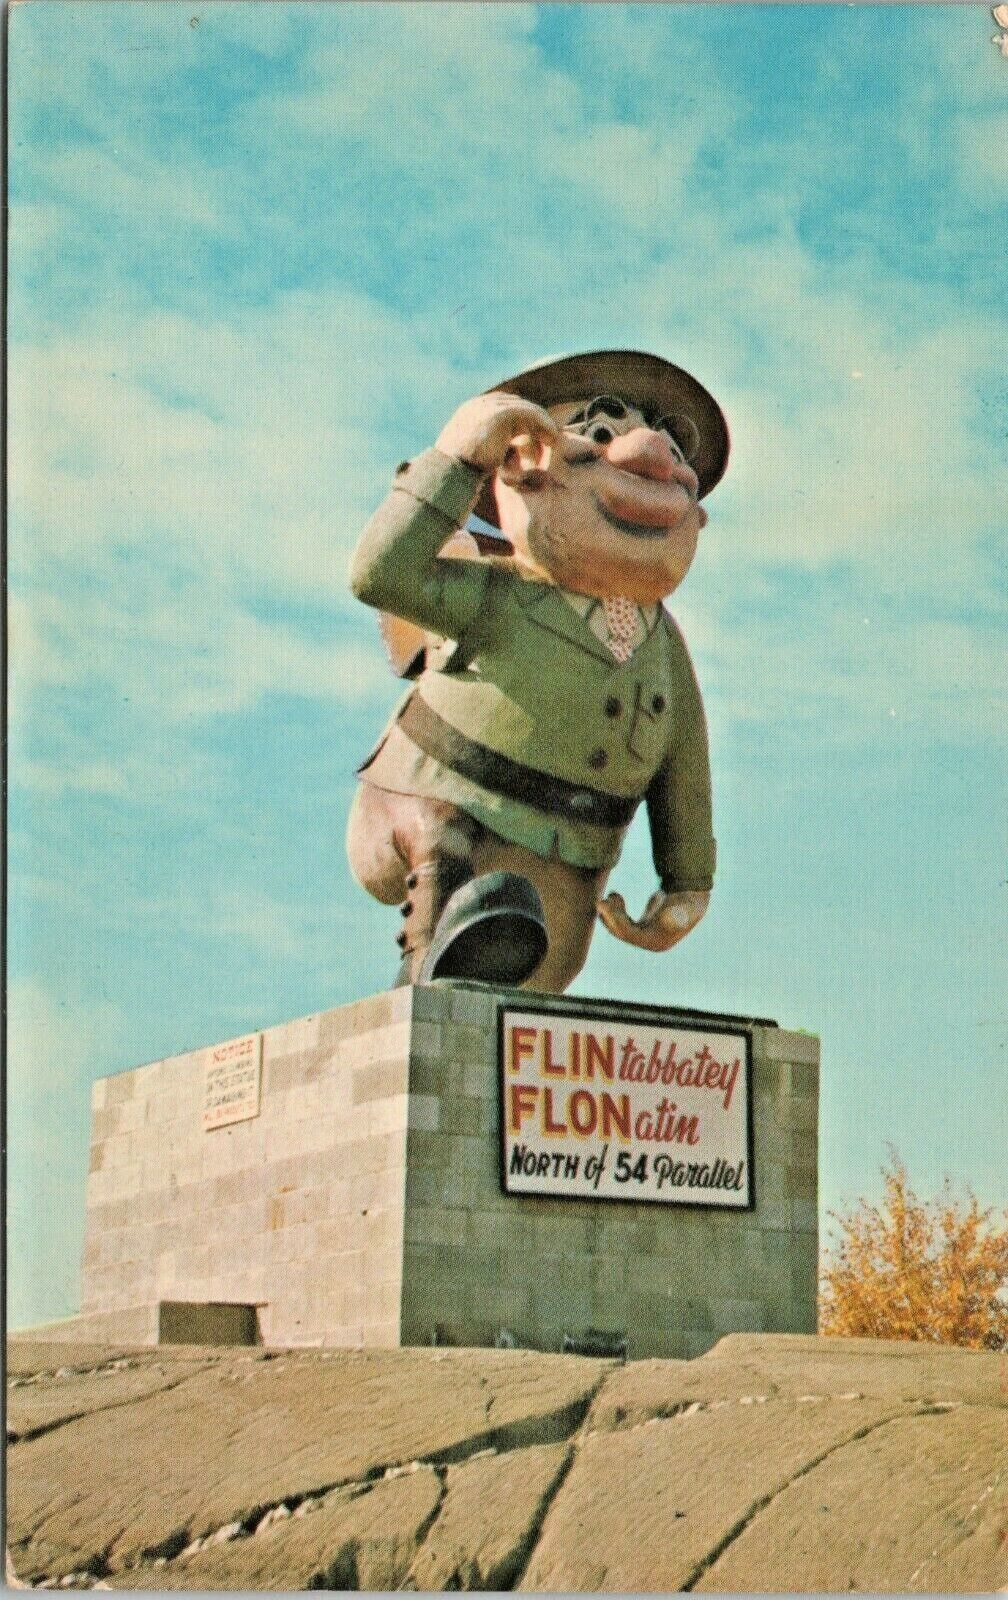 Flintabbatey Flonatin Flin Flon Manitoba Canada Vintage 1967 Postcard - Posted